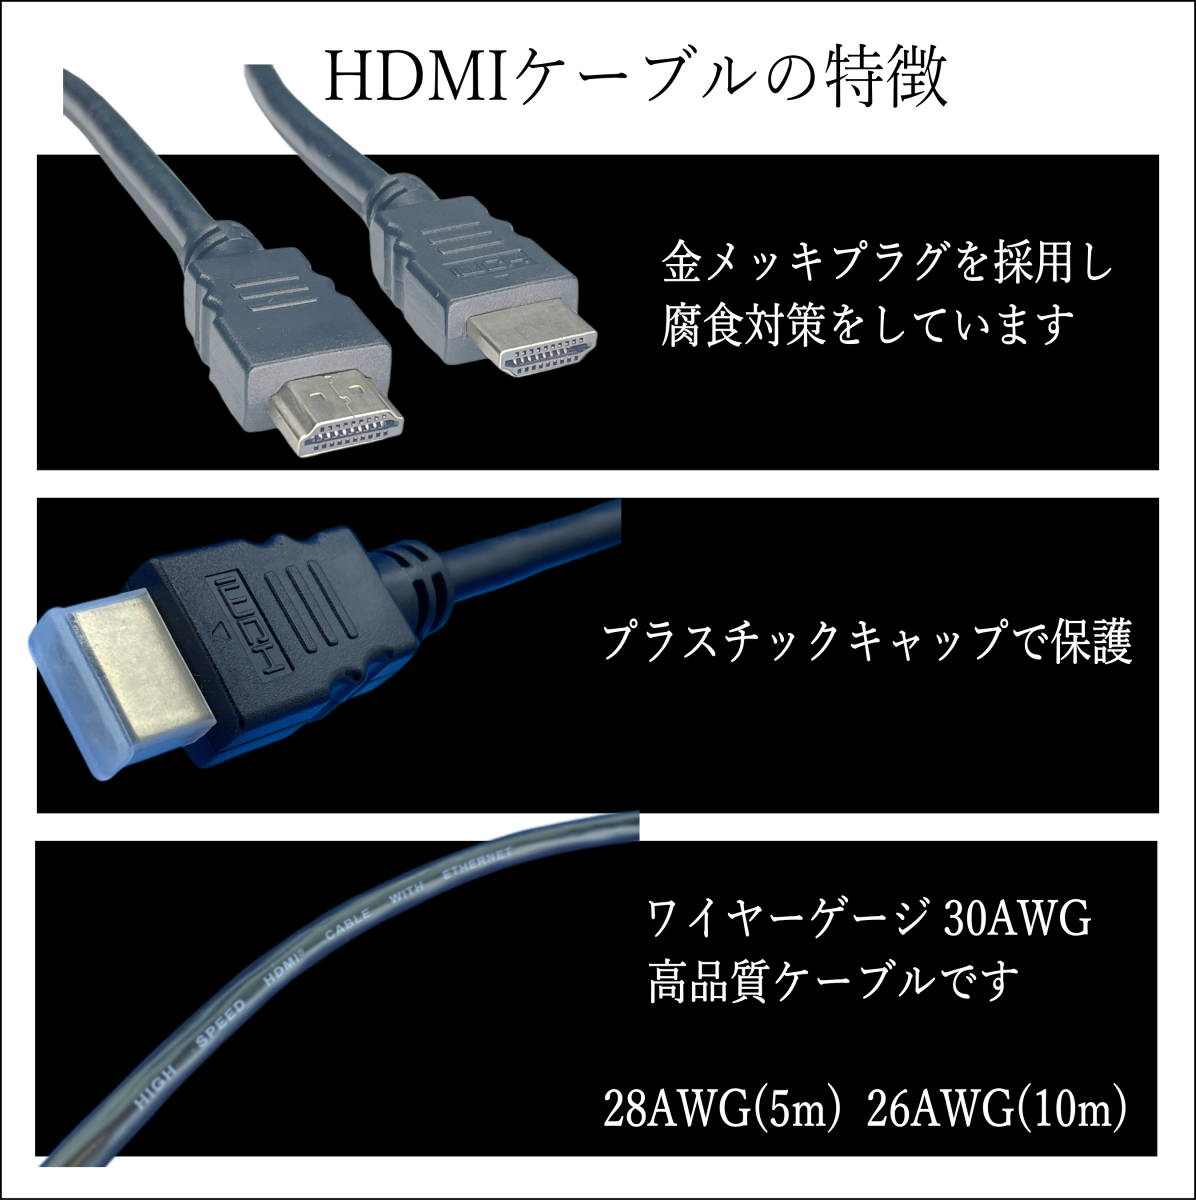 △HDMIケーブル 2m プレミアム高品質 Ver2.0　4KフルHD 3D映像 ネットワーク 60fps 対応 ハイスピード 2HDMI-20_画像6